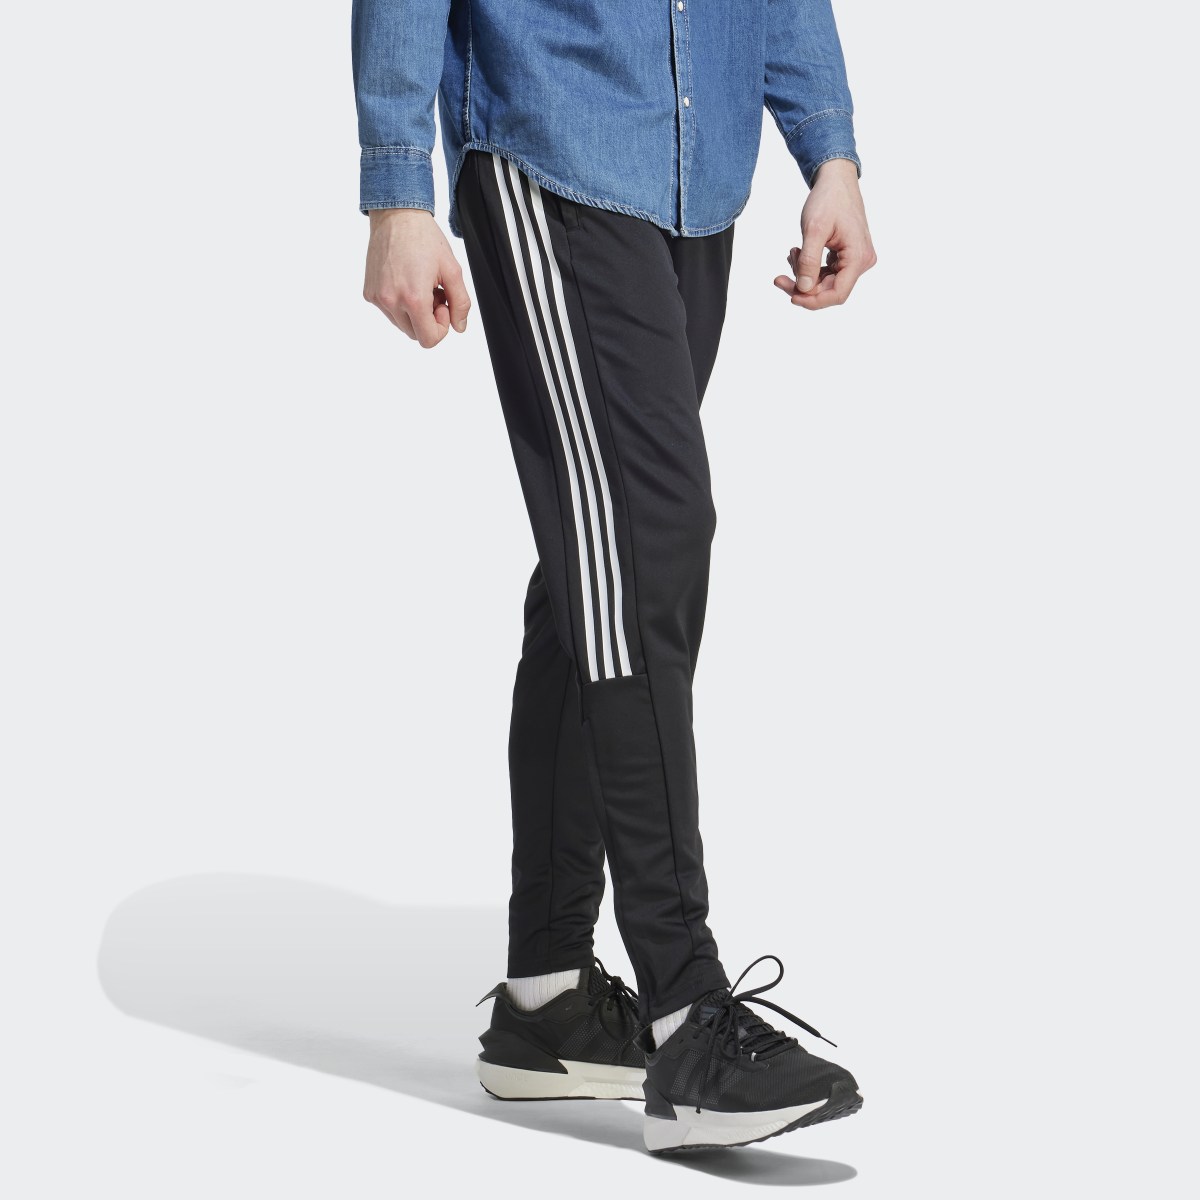 Adidas Pants Tiro Wordmark. 4